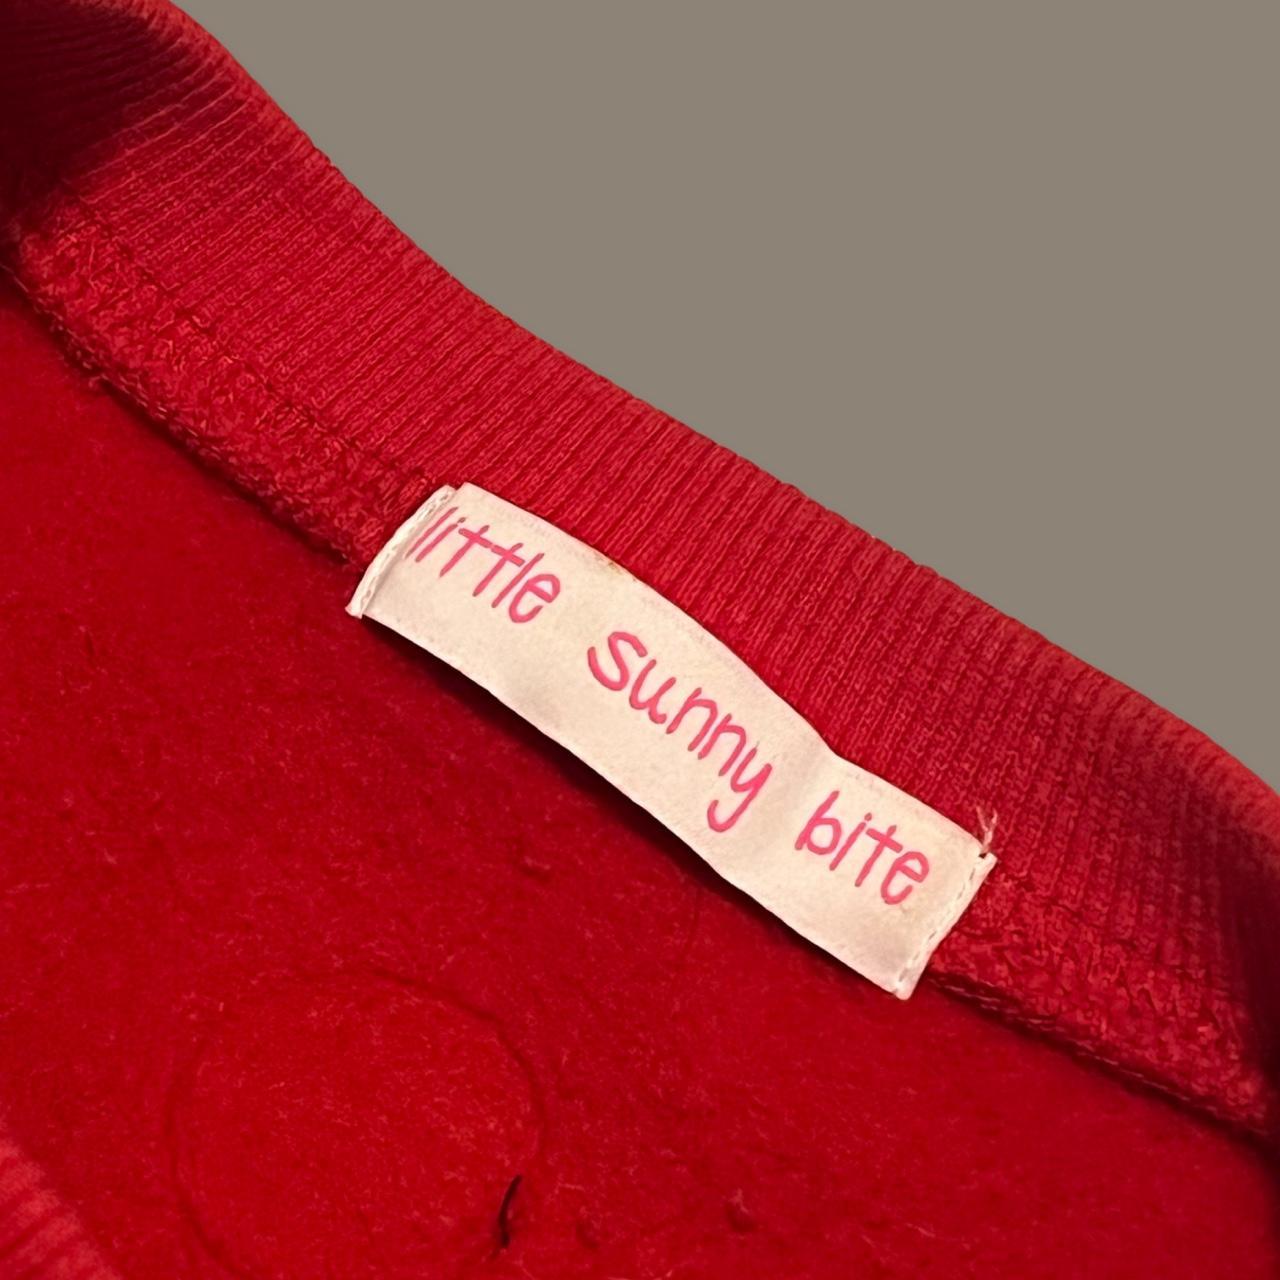 Little Sunny Bite Women's Red and White Sweatshirt (3)